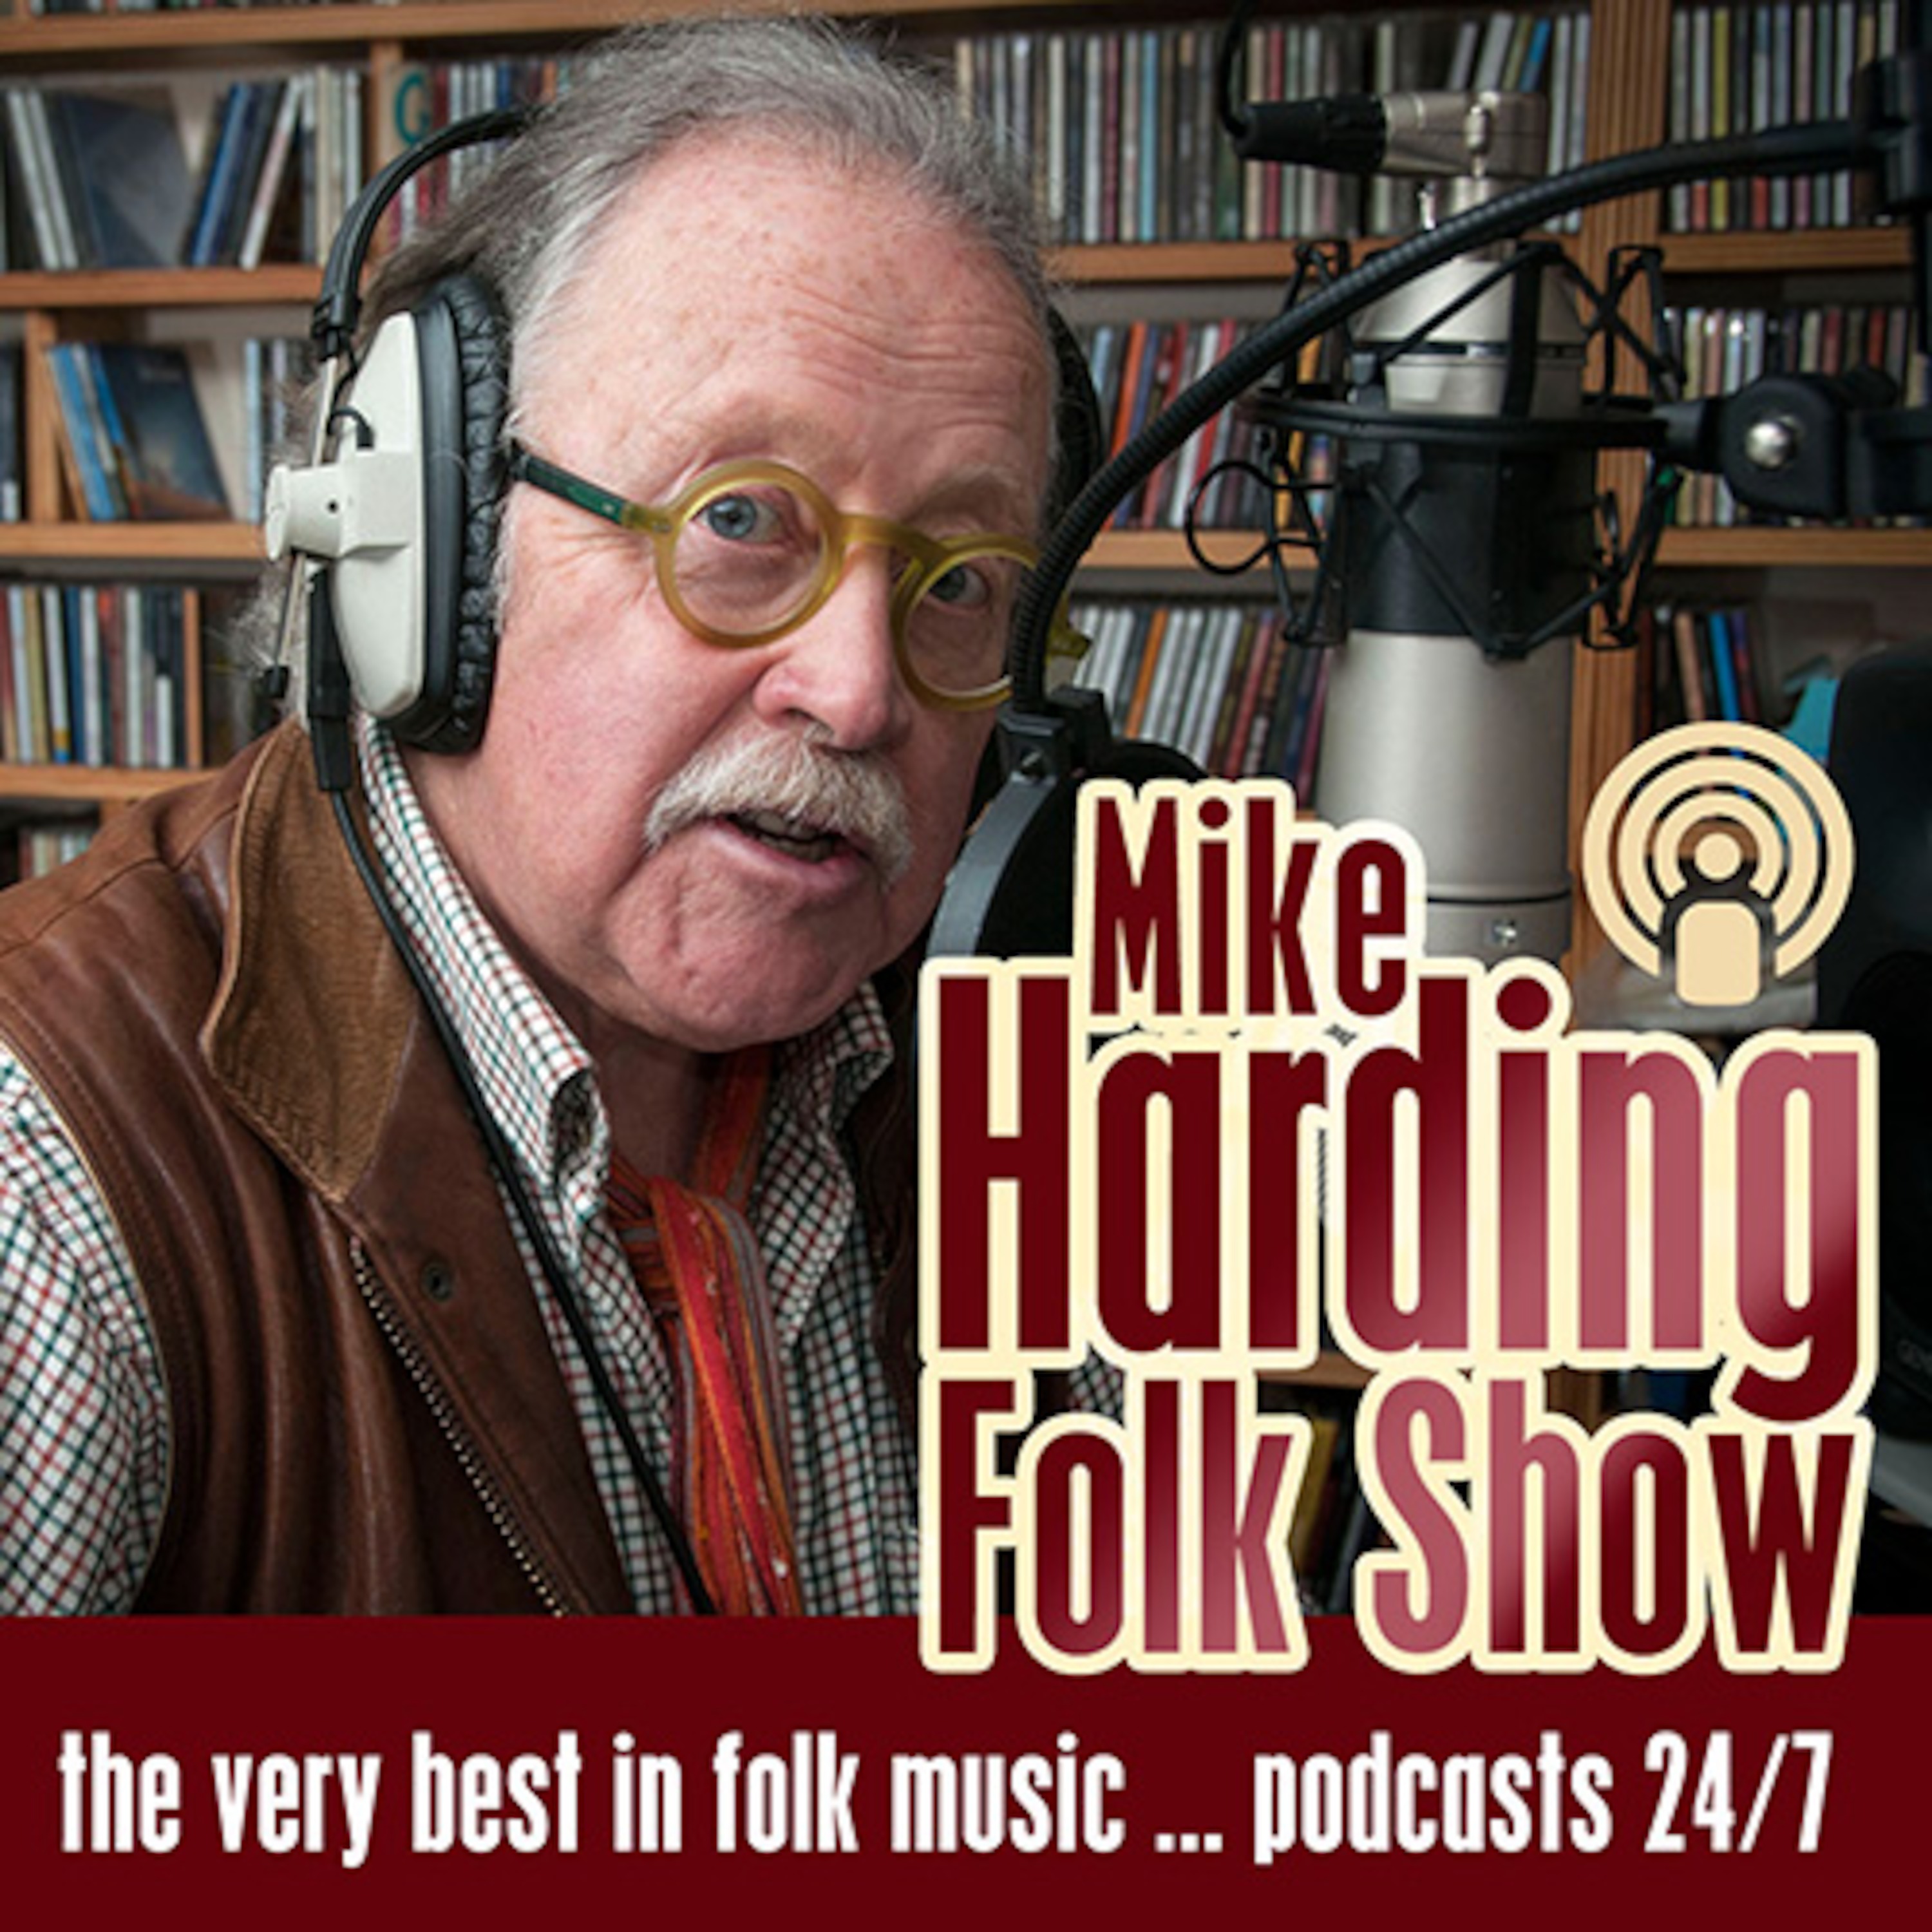 Mike Harding Folk Show 29